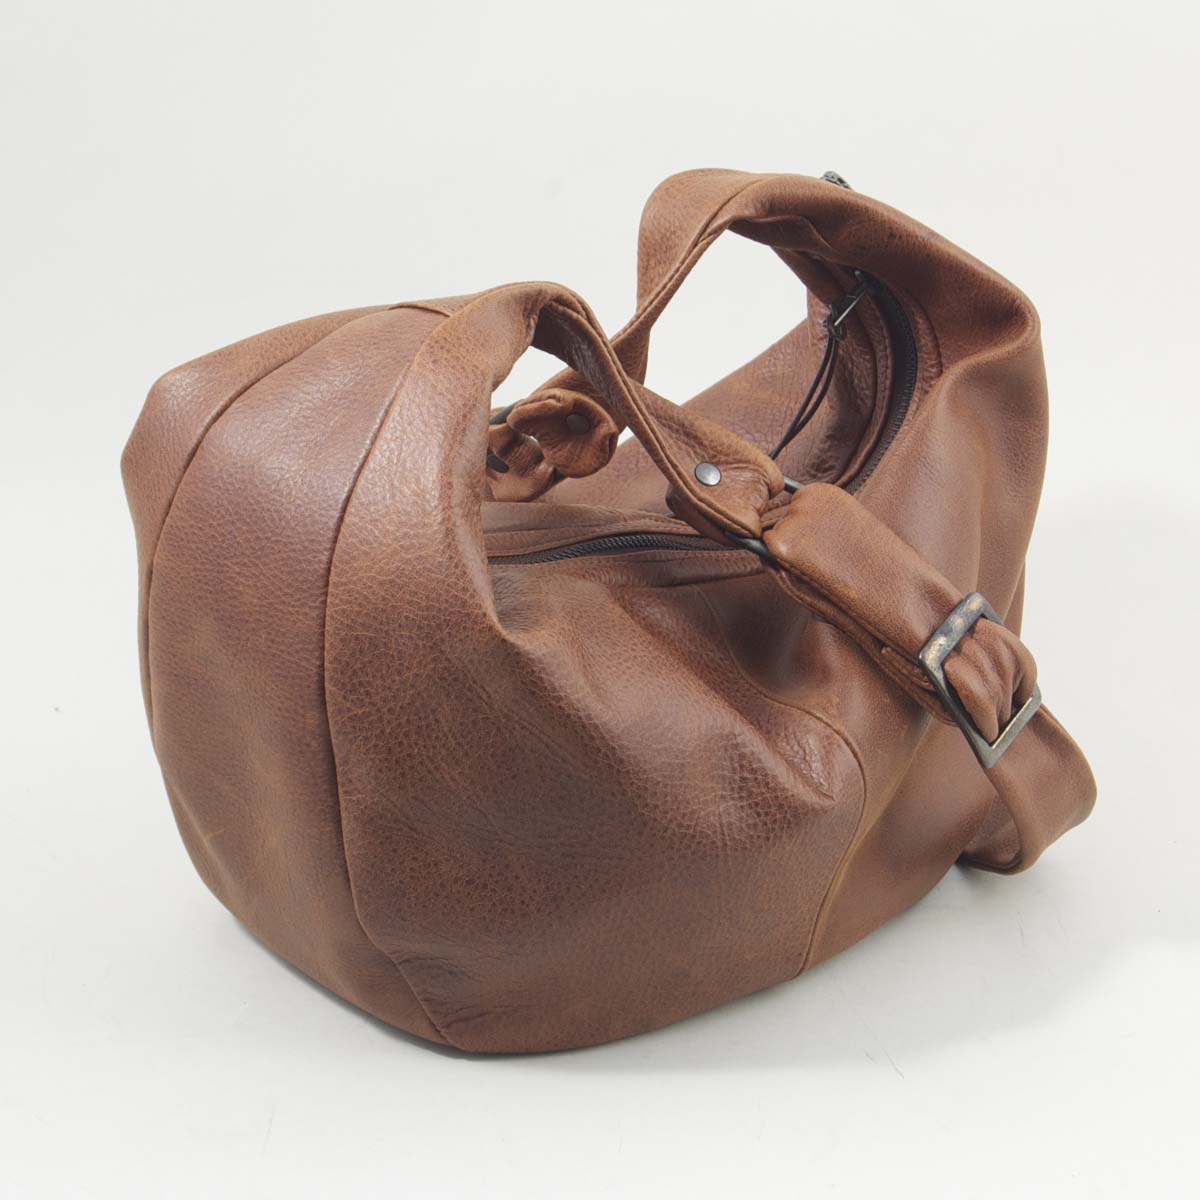 Soft Bags - The Hammock Bag 